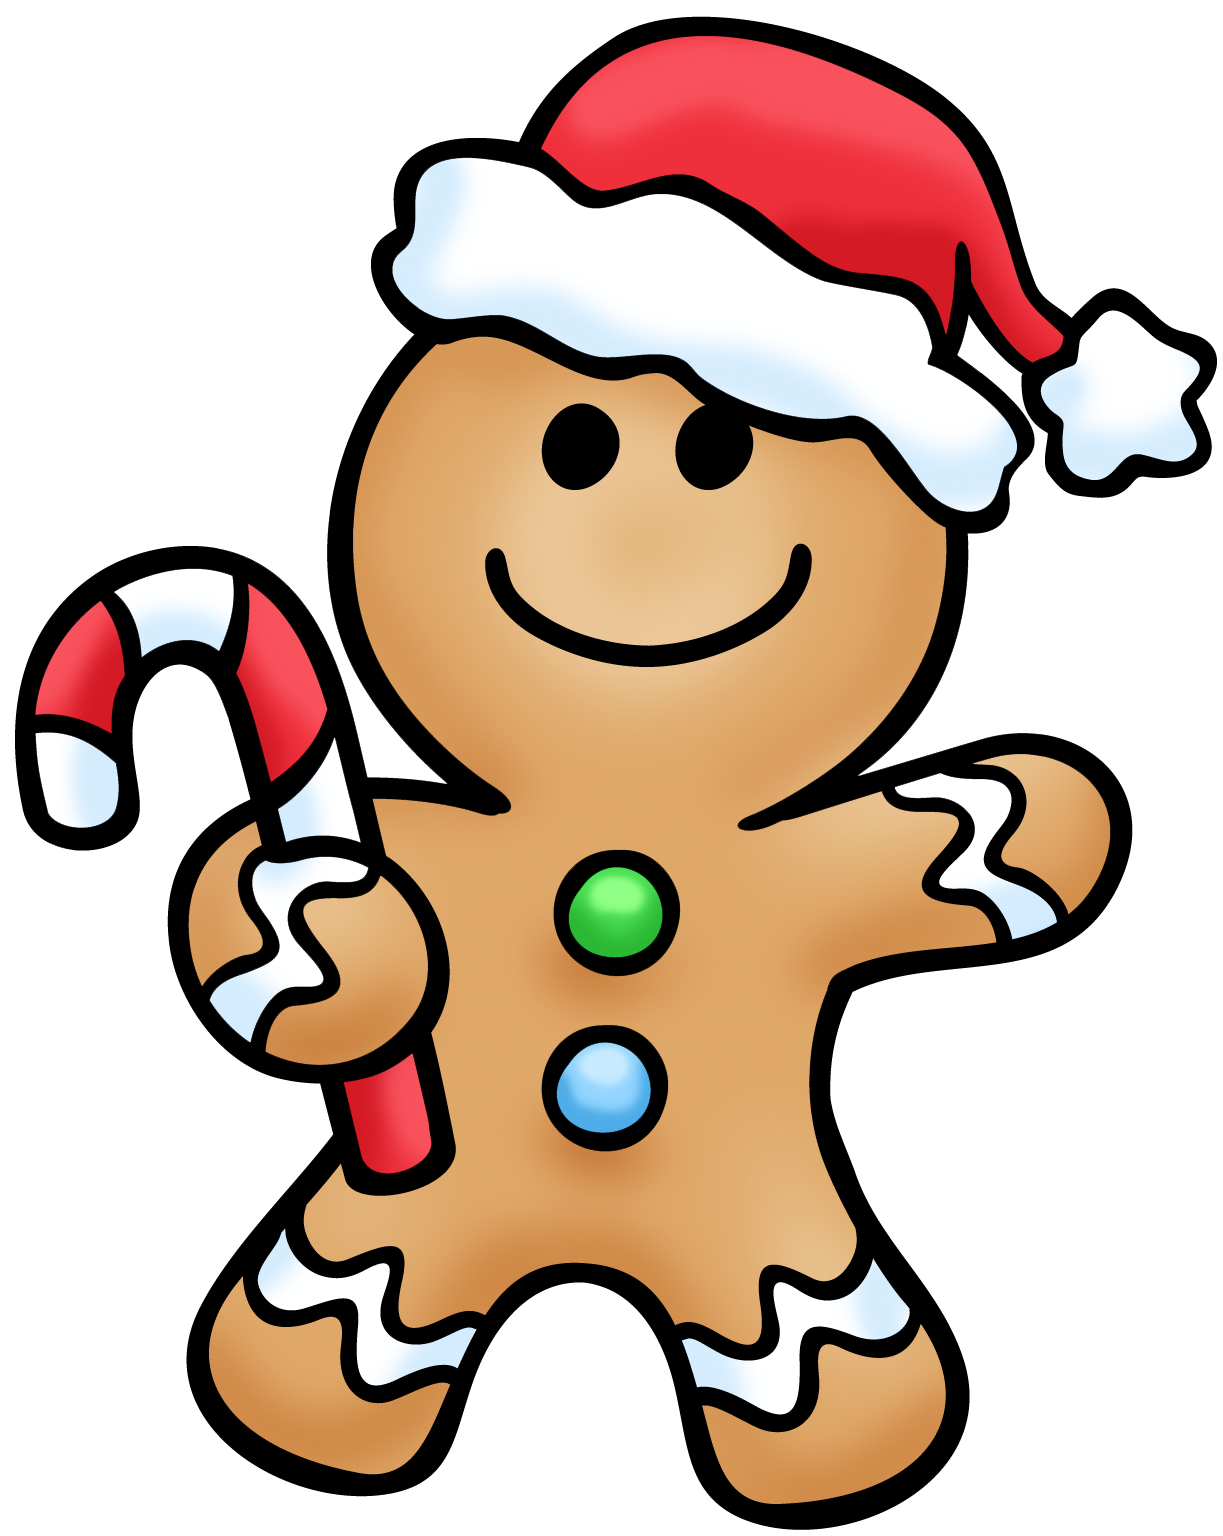 Gingerbread Man PNG Image